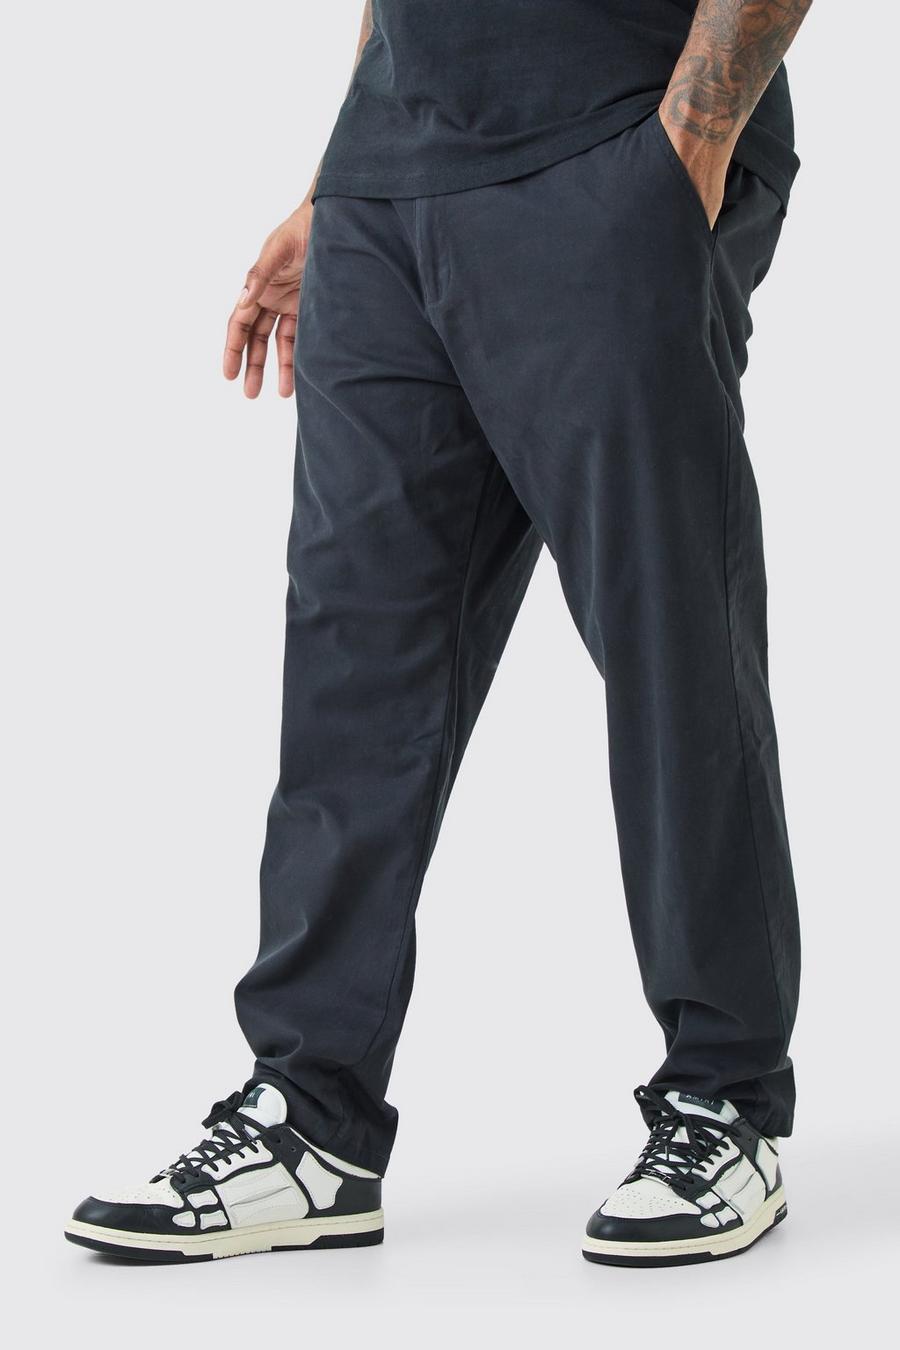 Pantaloni Chino Plus Size Skinny Fit con vita fissa, Black